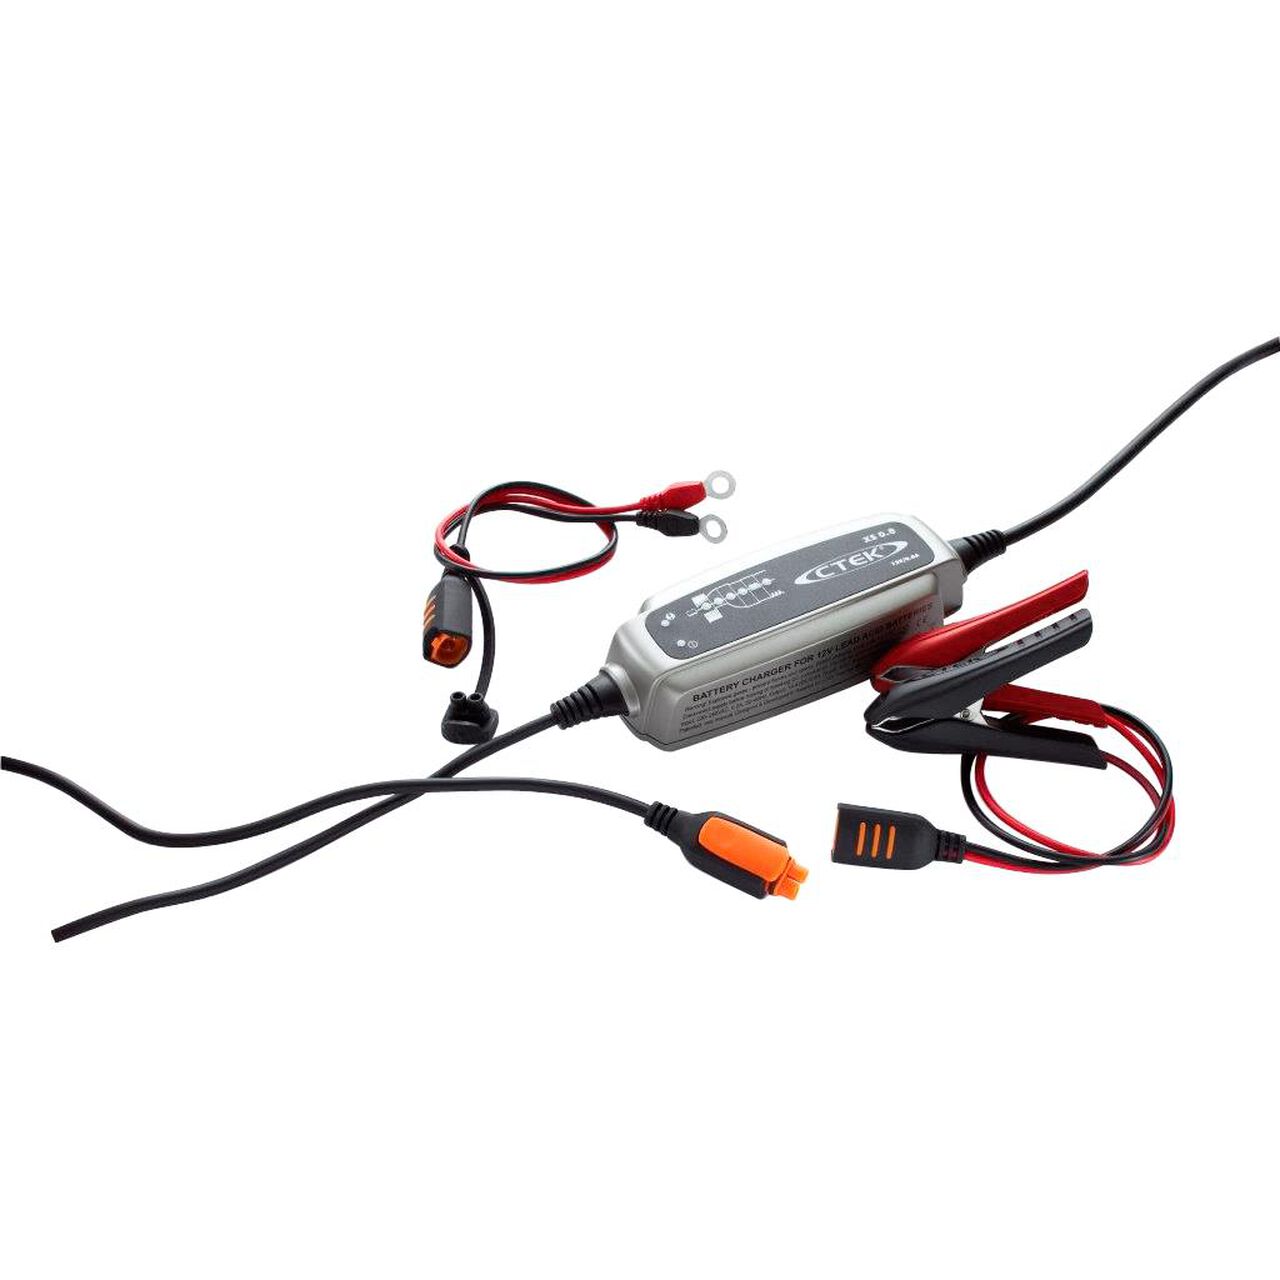 battery charger XS 0.8 EU, 12V 800mA, for lead acid